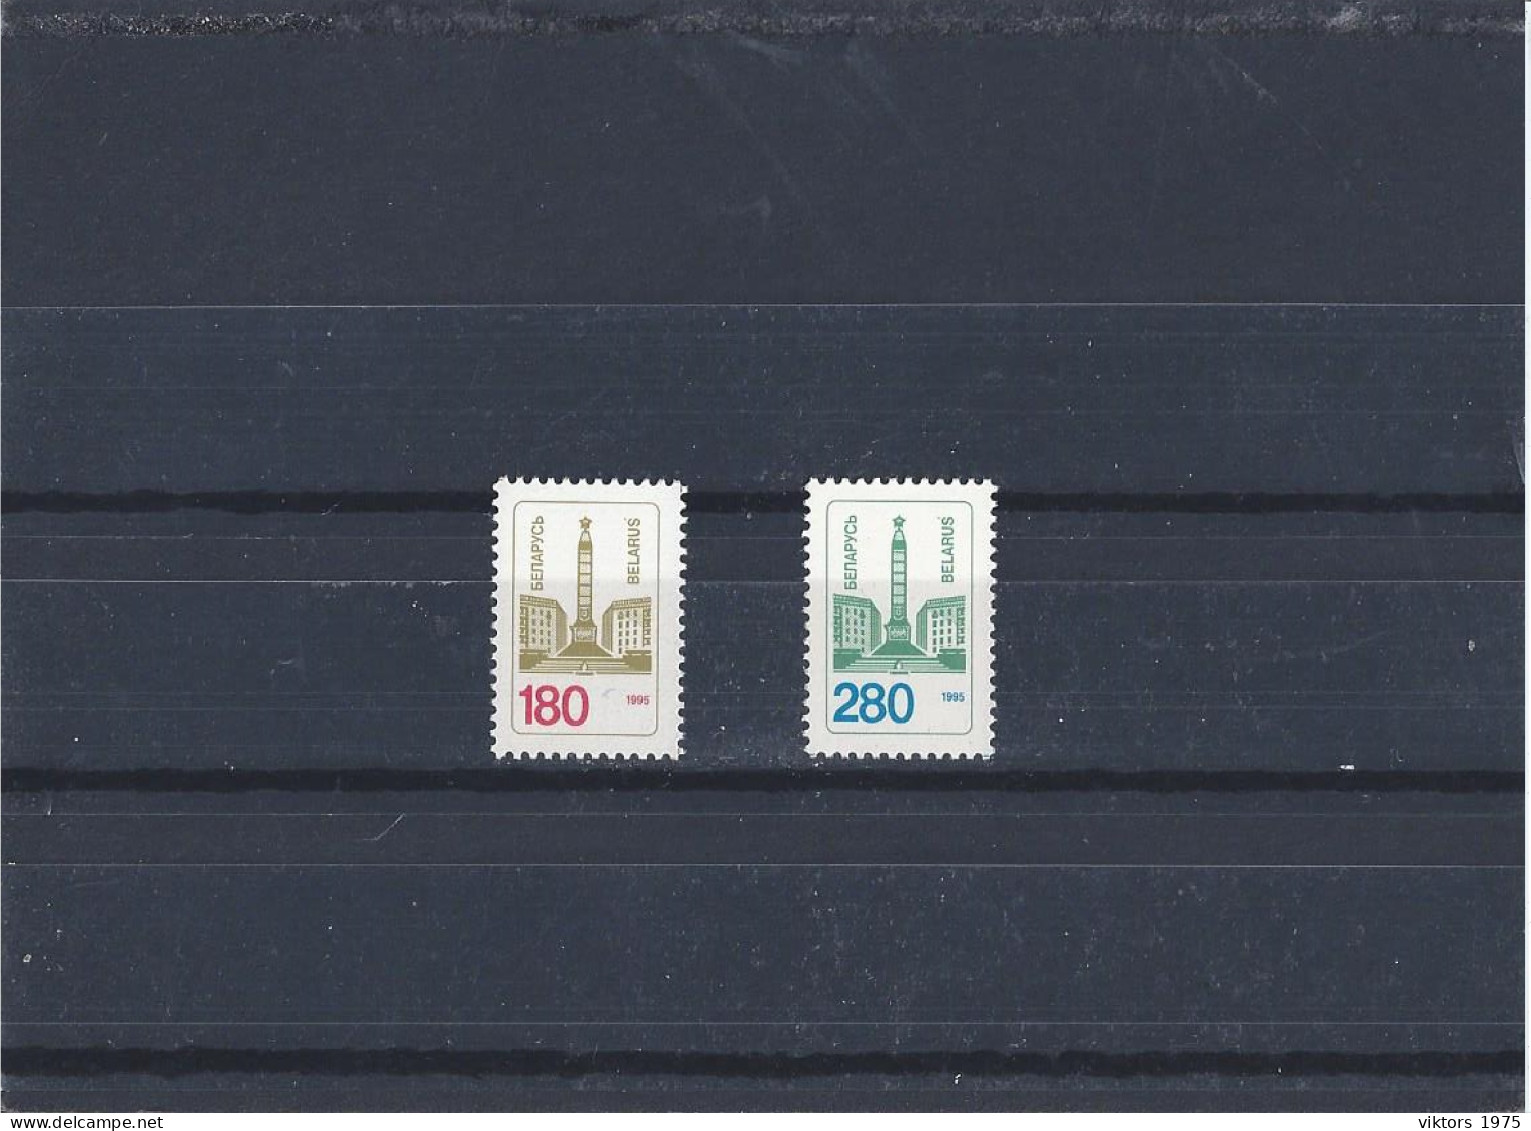 MNH Stamps Nr.90-91 In MICHEL Catalog - Belarus